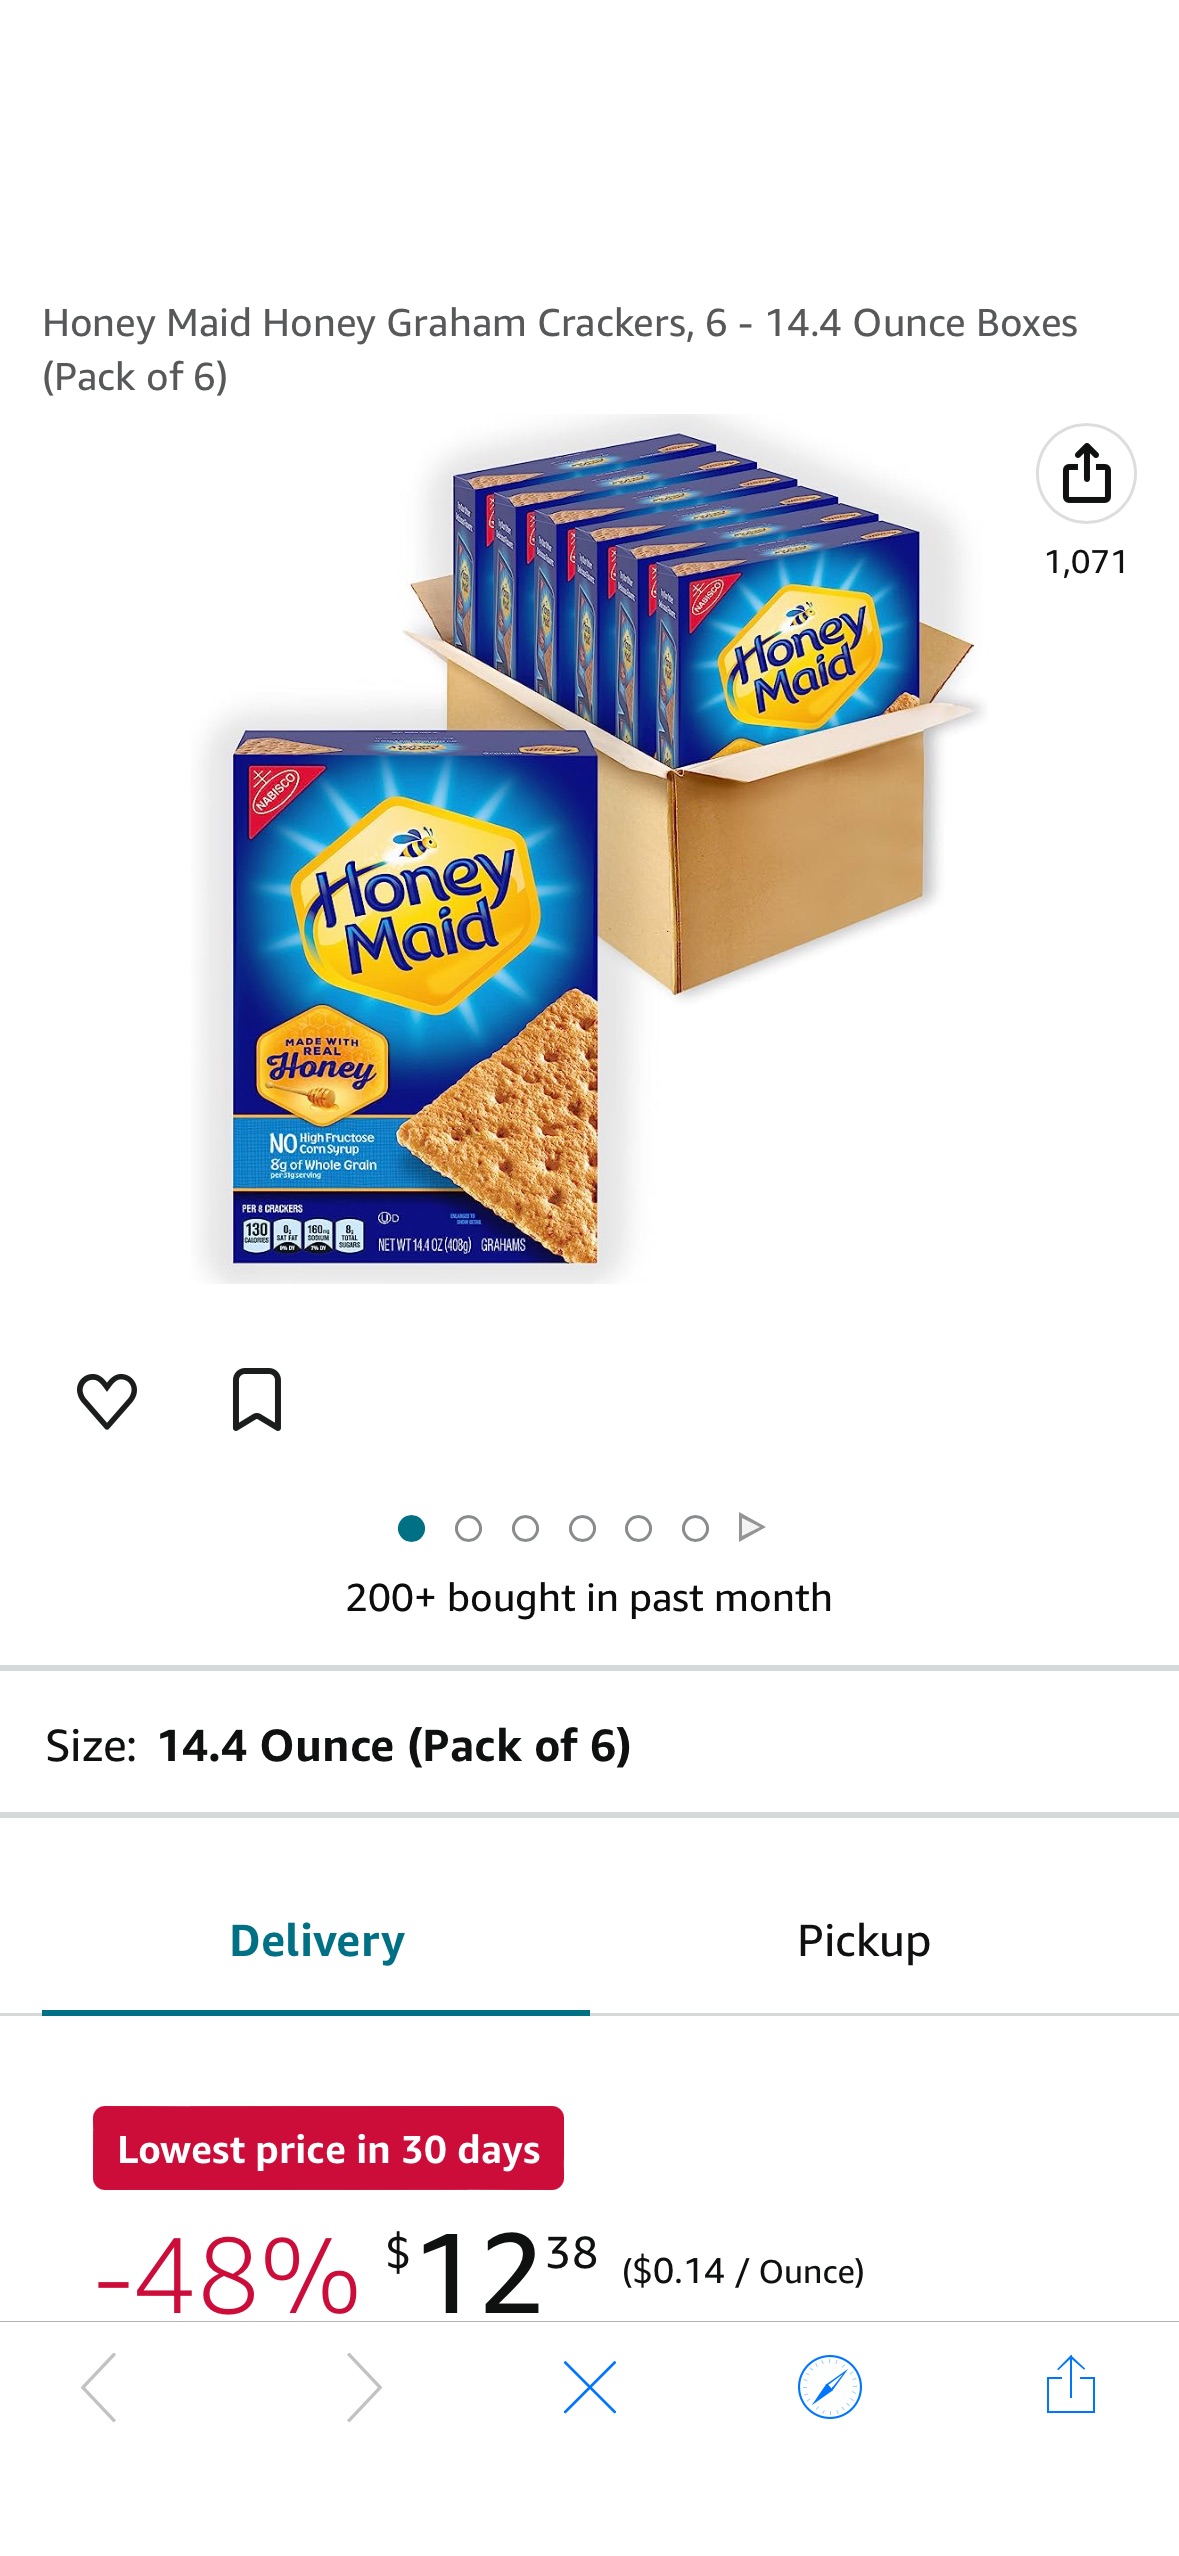 Amazon.com: Honey Maid Honey Graham Crackers, 6 - 14.4 Ounce Boxes (Pack of 6)